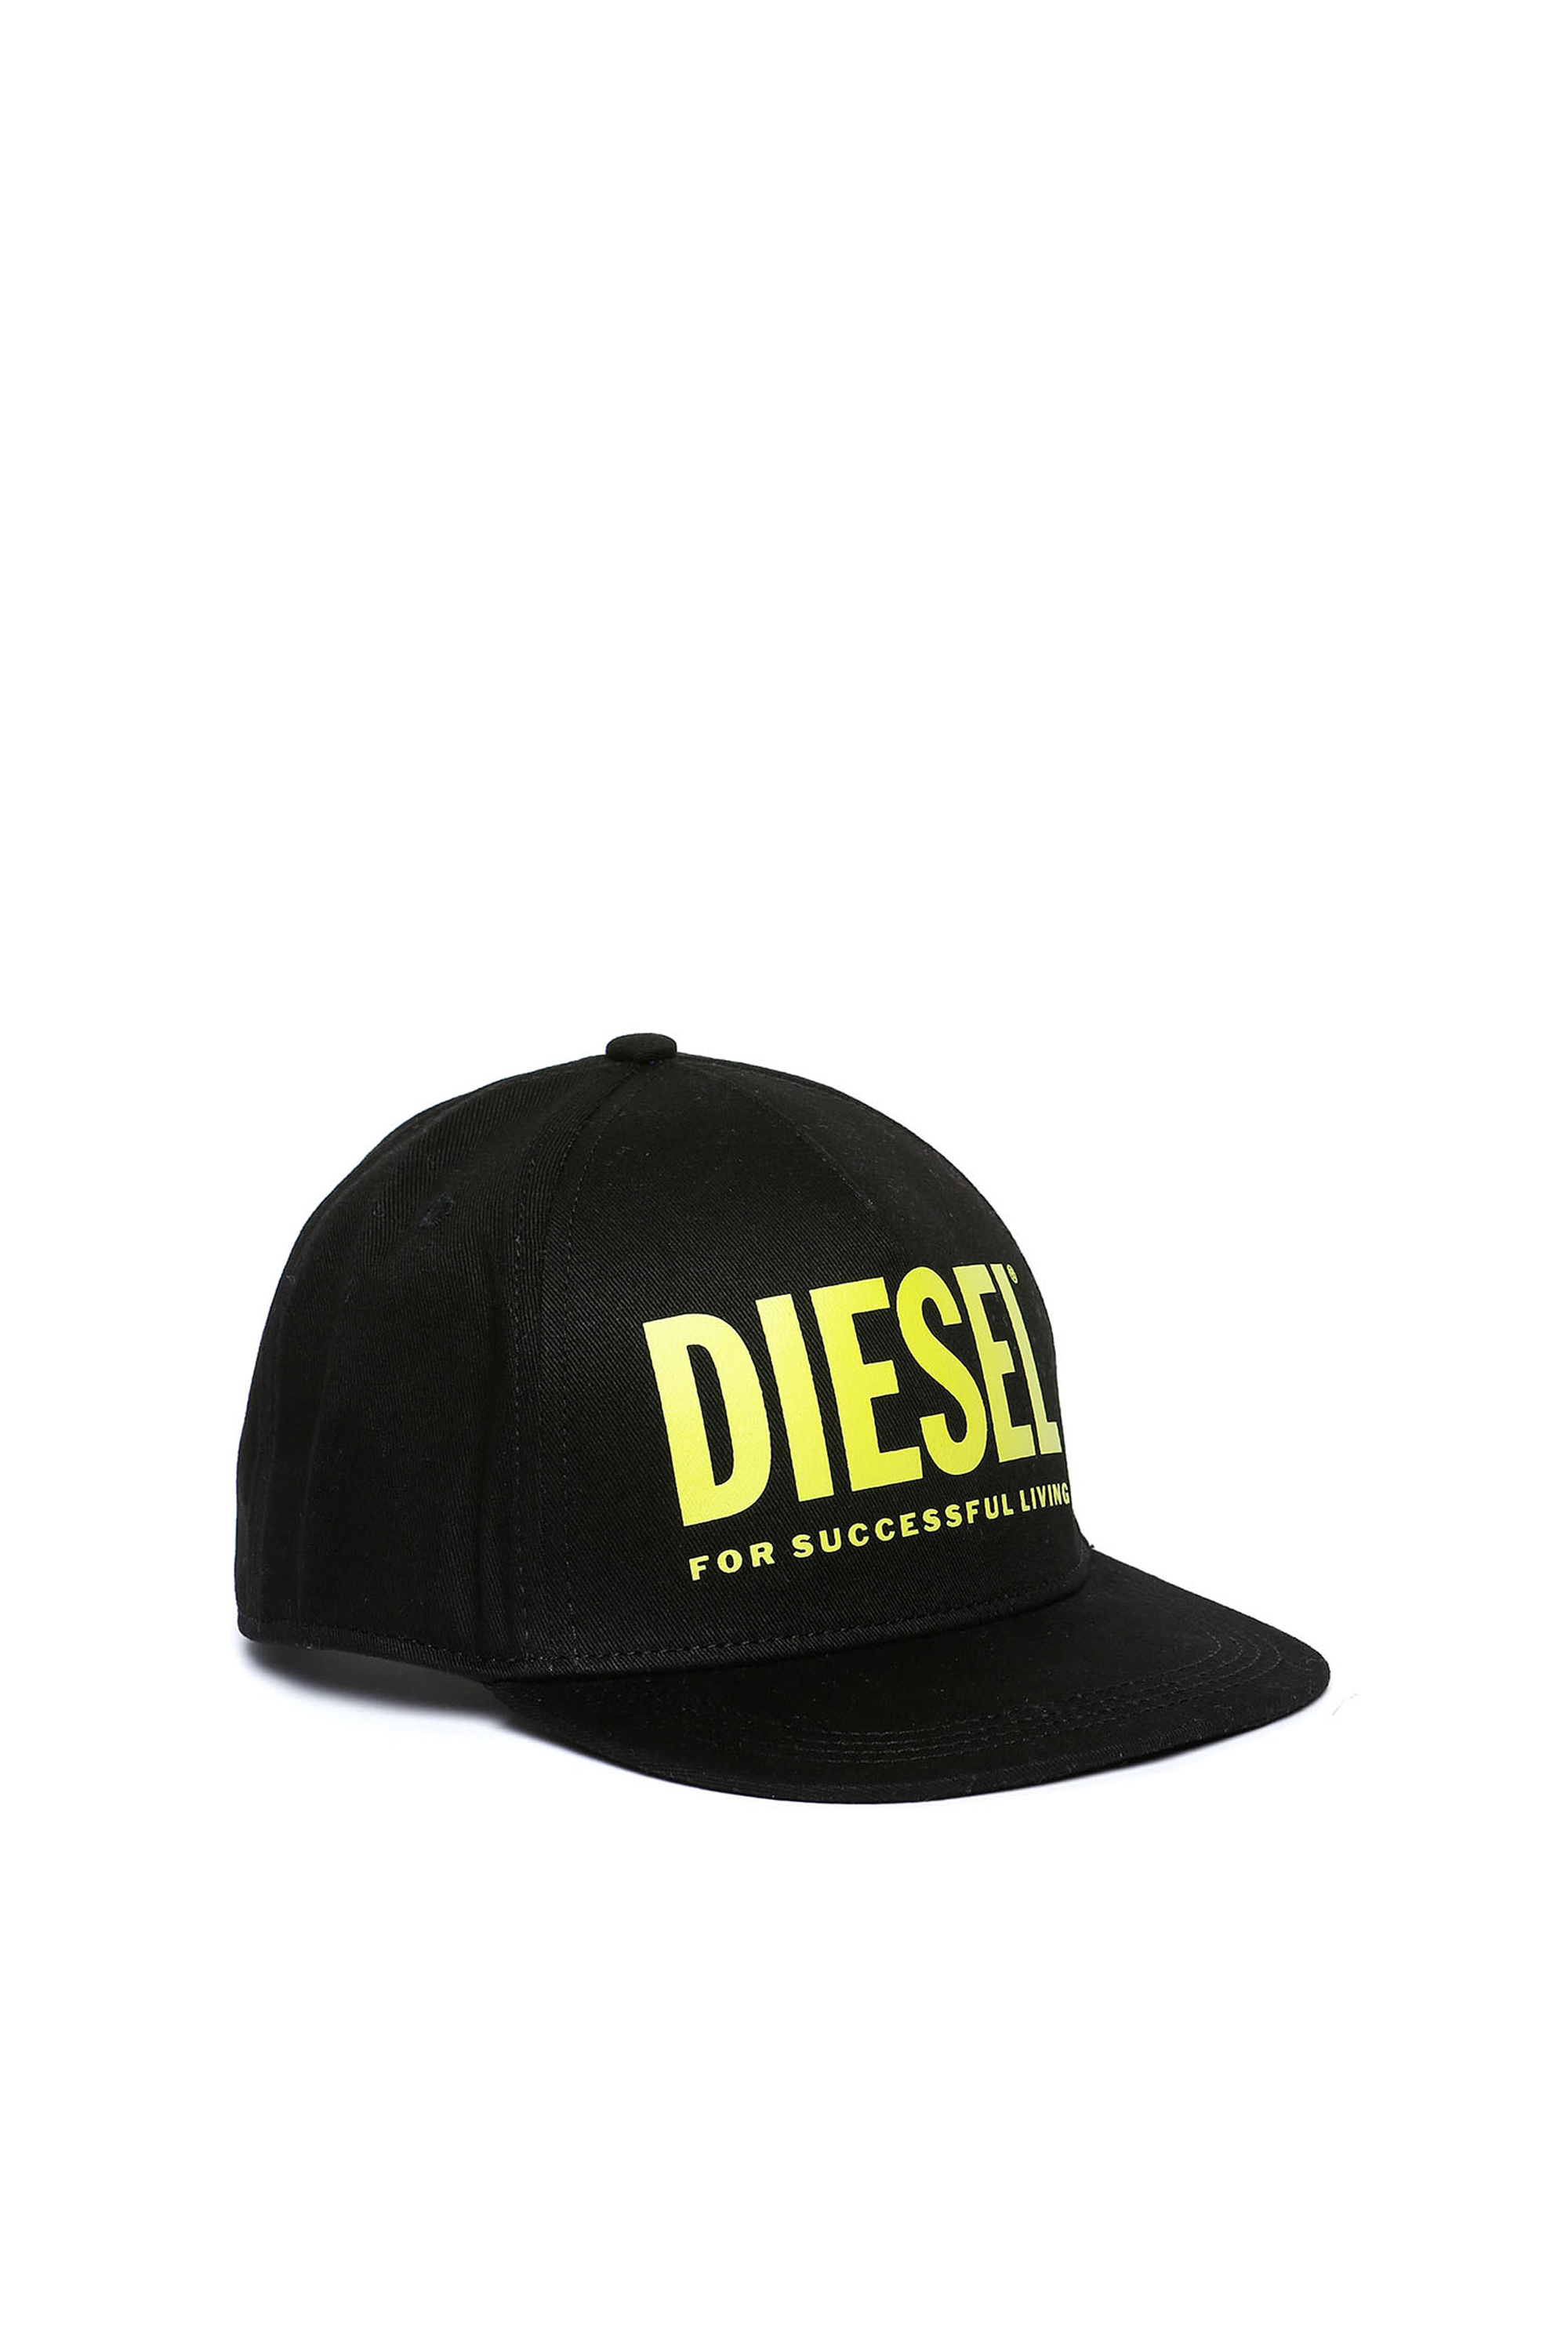 Diesel - FOLLY, Black/Yellow - Image 1